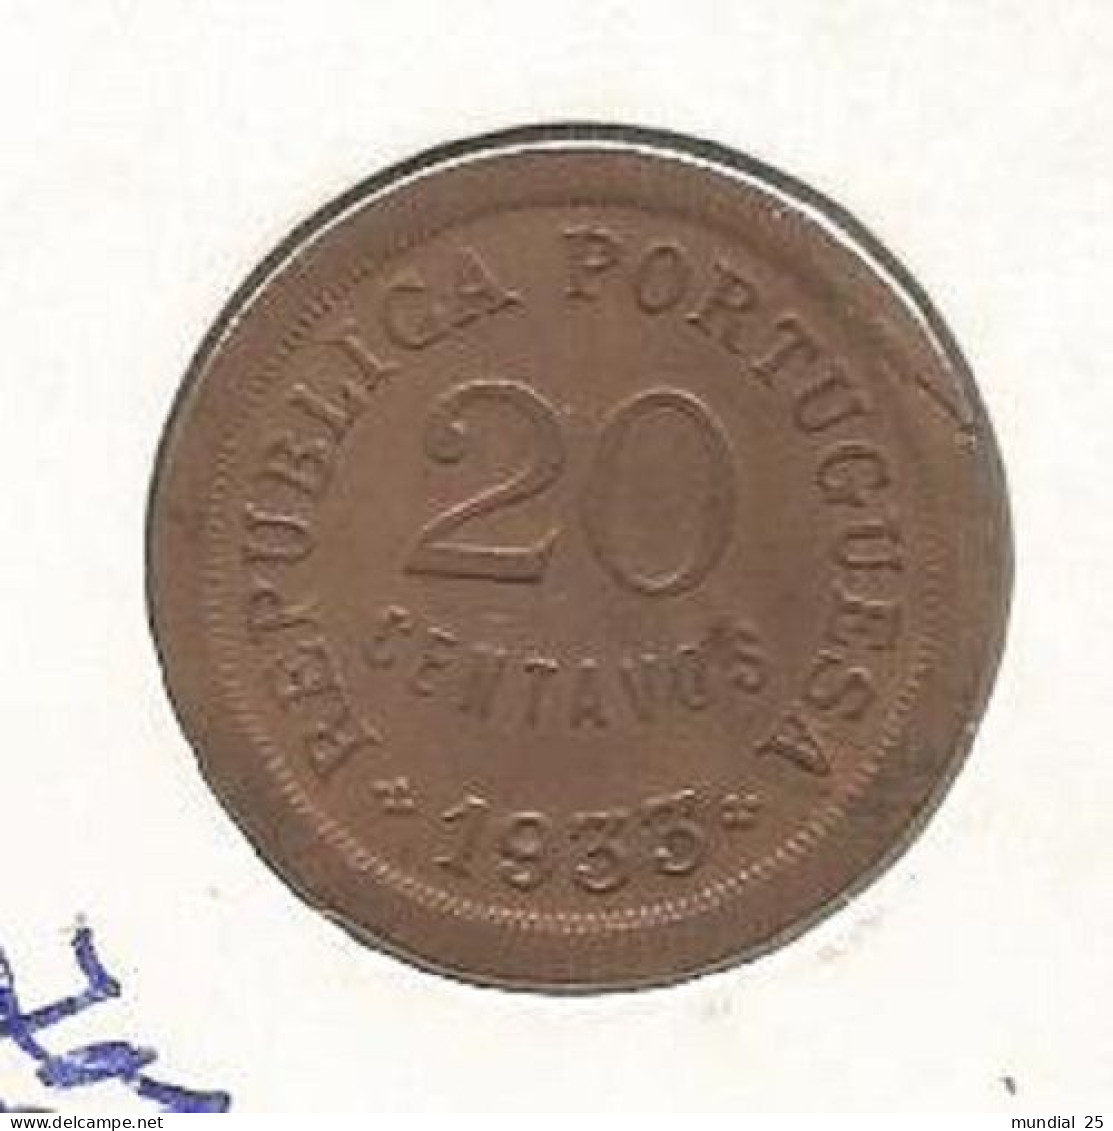 GUINEA-BISSAU PORTUGAL 20 CENTAVOS 1933 - Guinea-Bissau